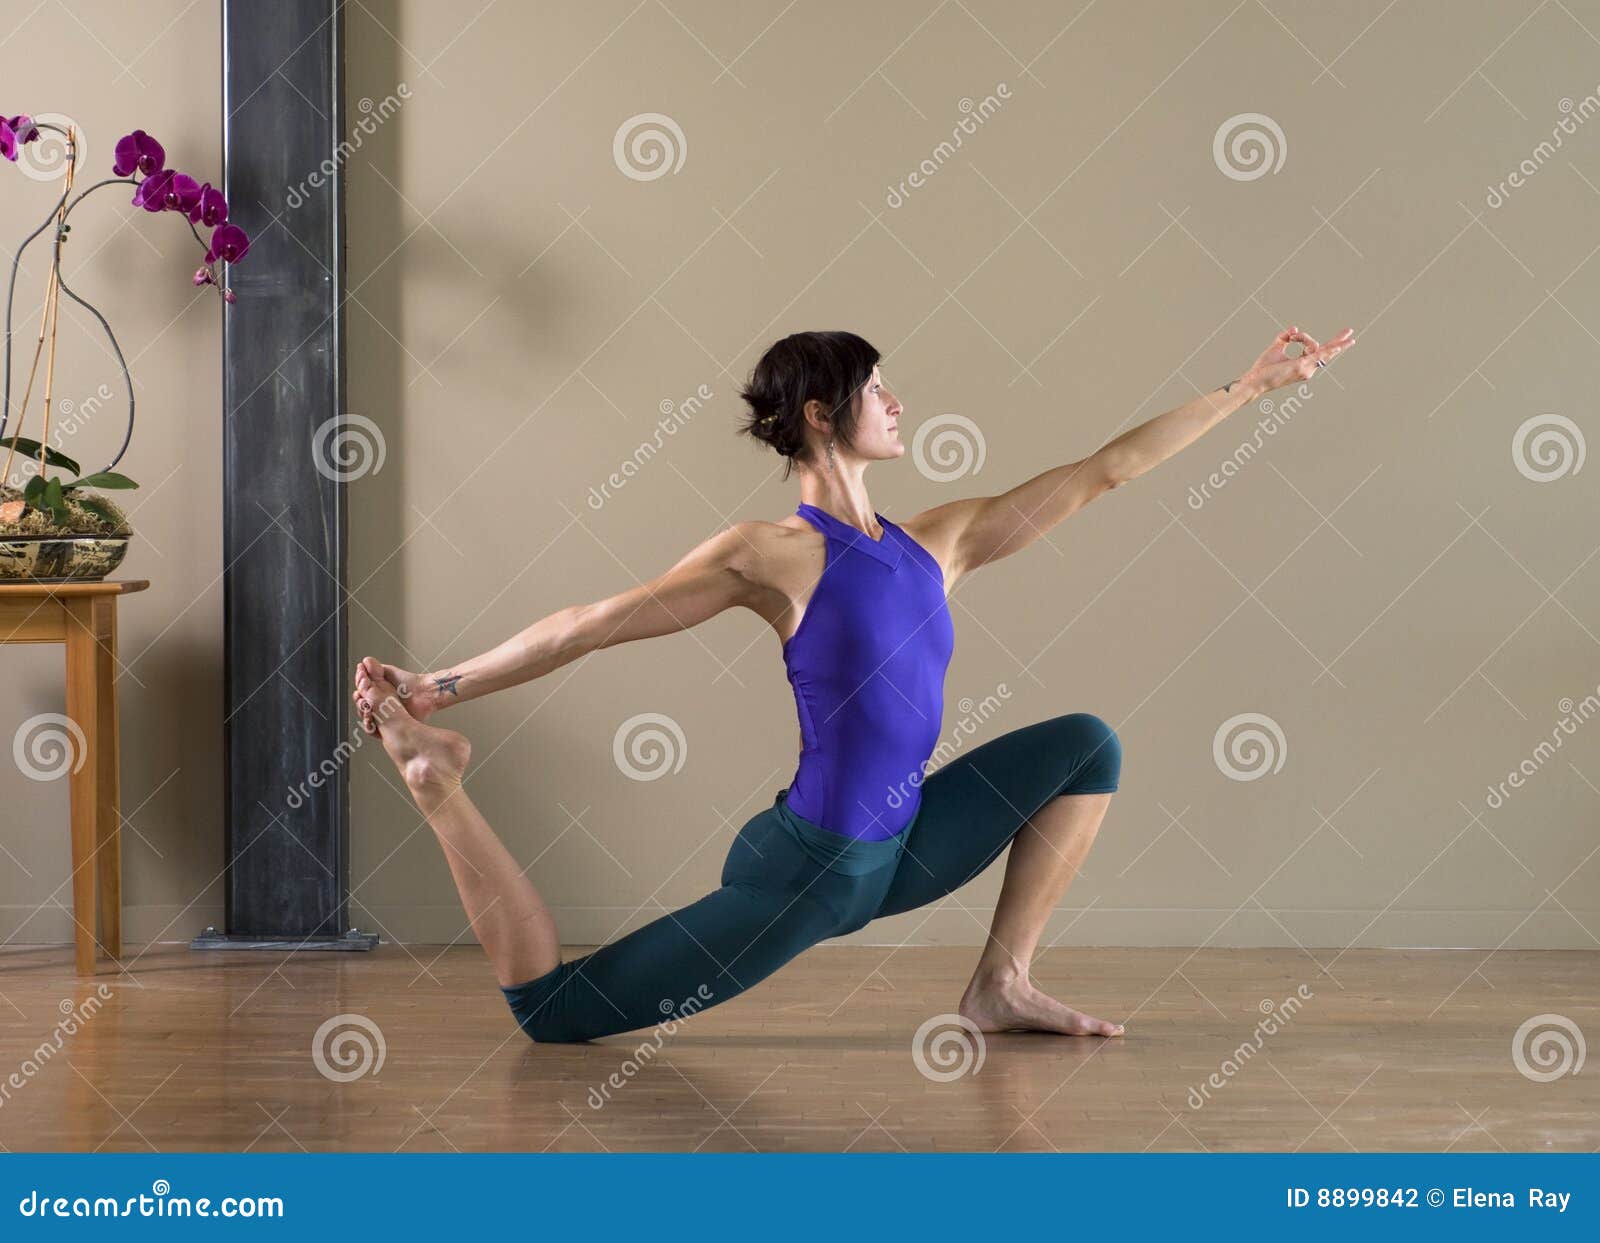 Yoga for a Perfect Posture • Yoga Basics